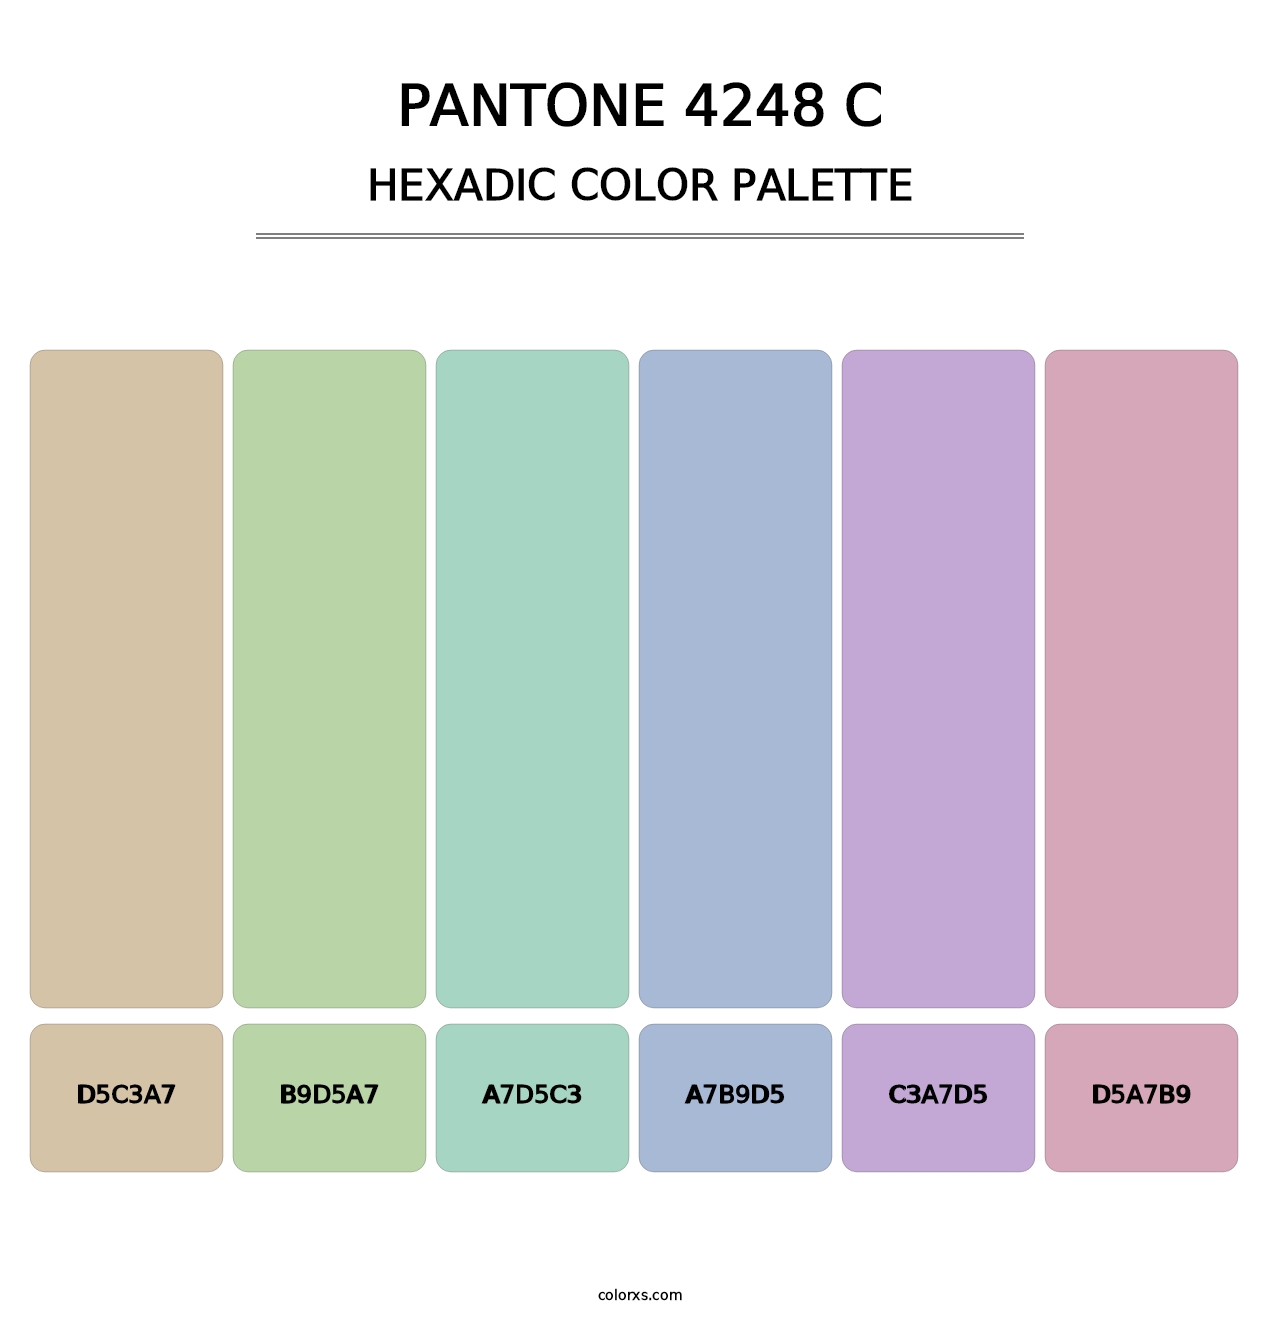 PANTONE 4248 C - Hexadic Color Palette